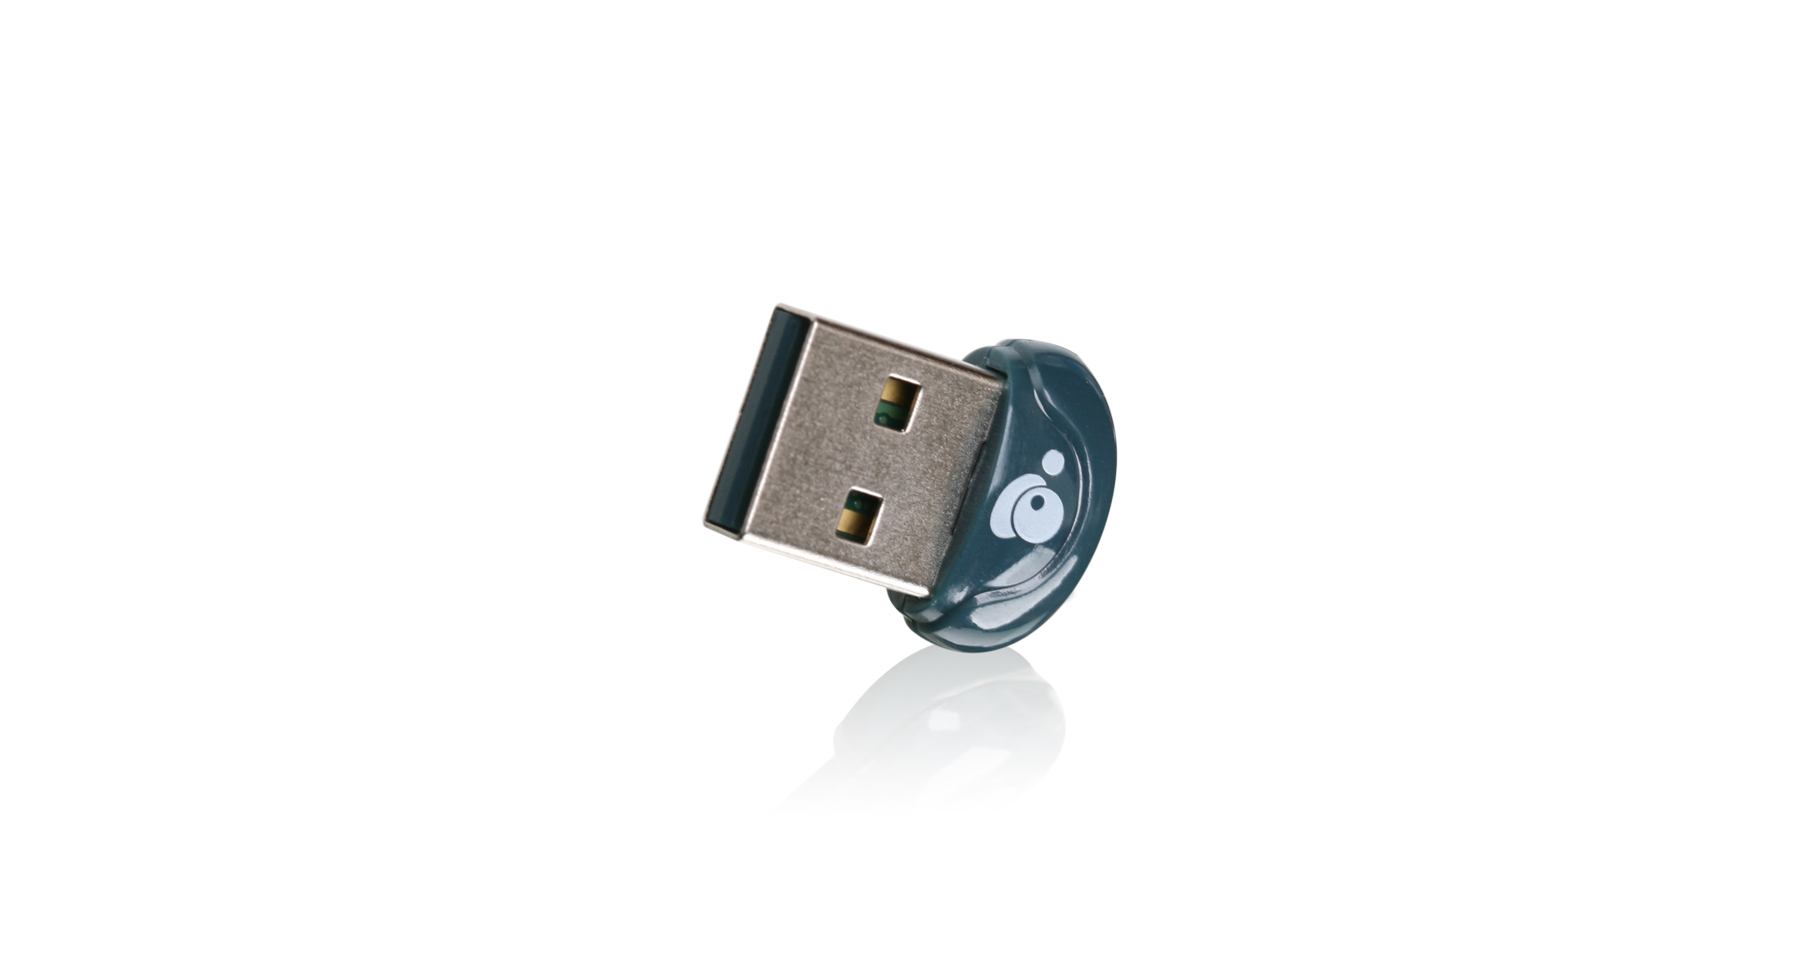 IOGEAR - GBU521W6 - Micro USB Bluetooth 4.0 Transmitter Multi-Language  version